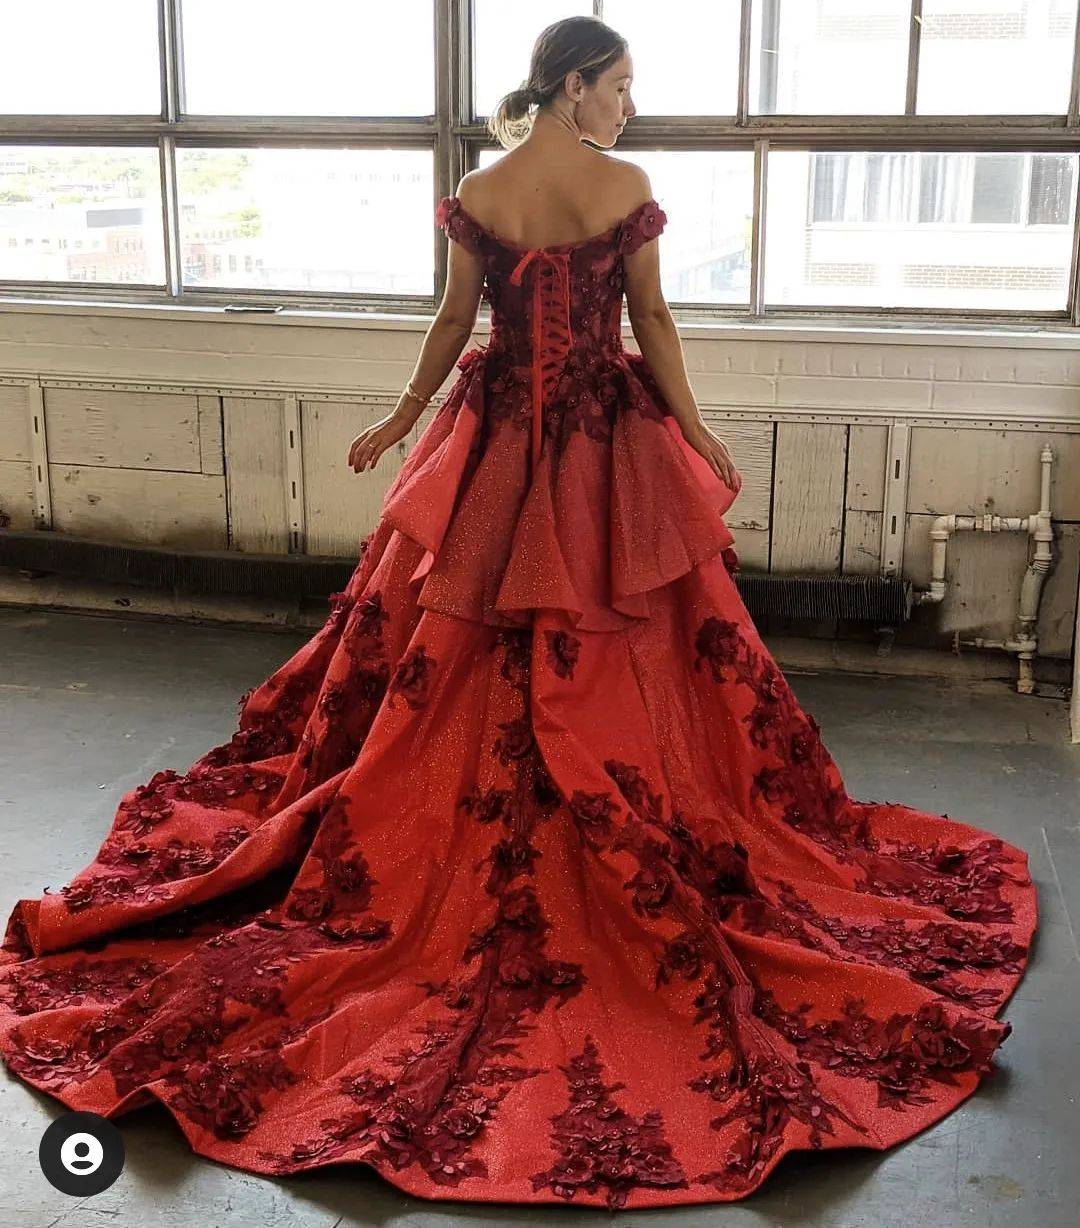 red glitter wedding dress with black lace via margit__david